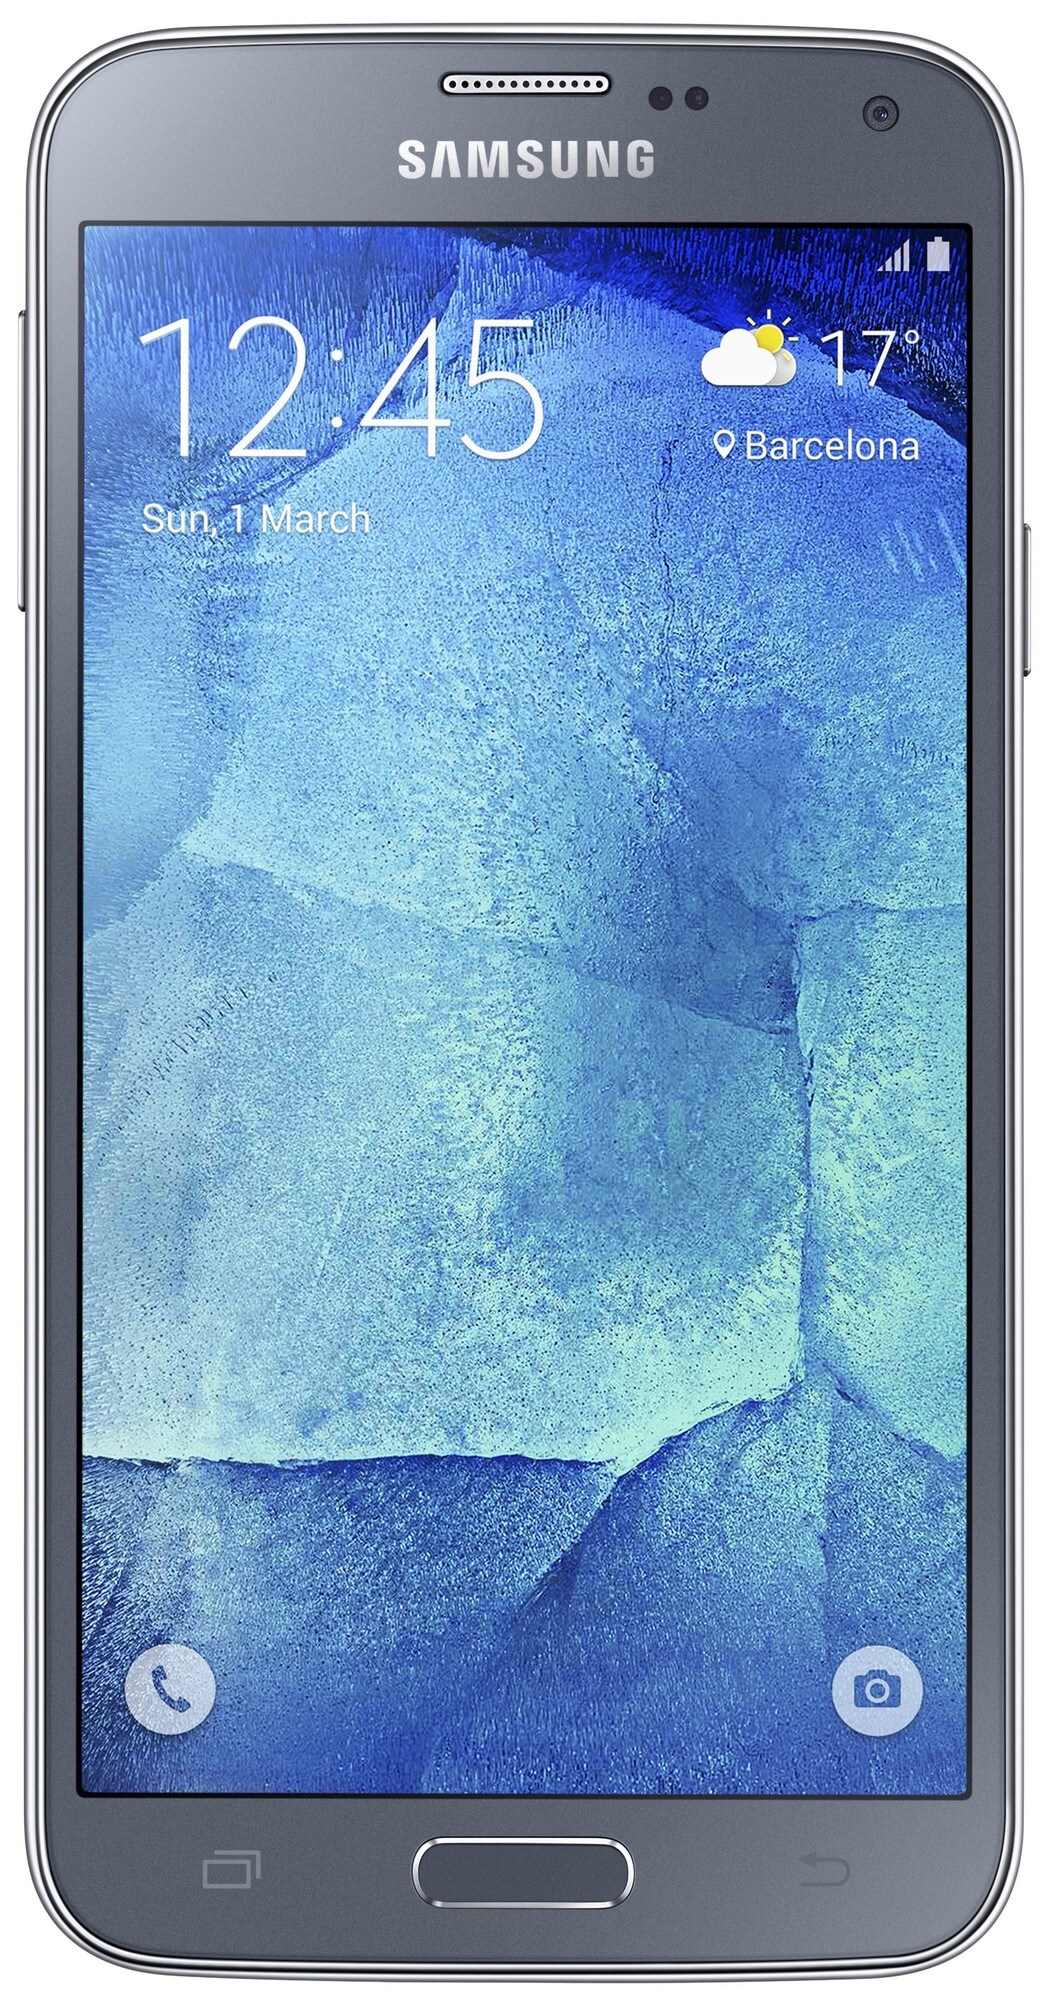 Samsung Galaxy S5 Neo smarttelefon (sølv) - Elkjøp